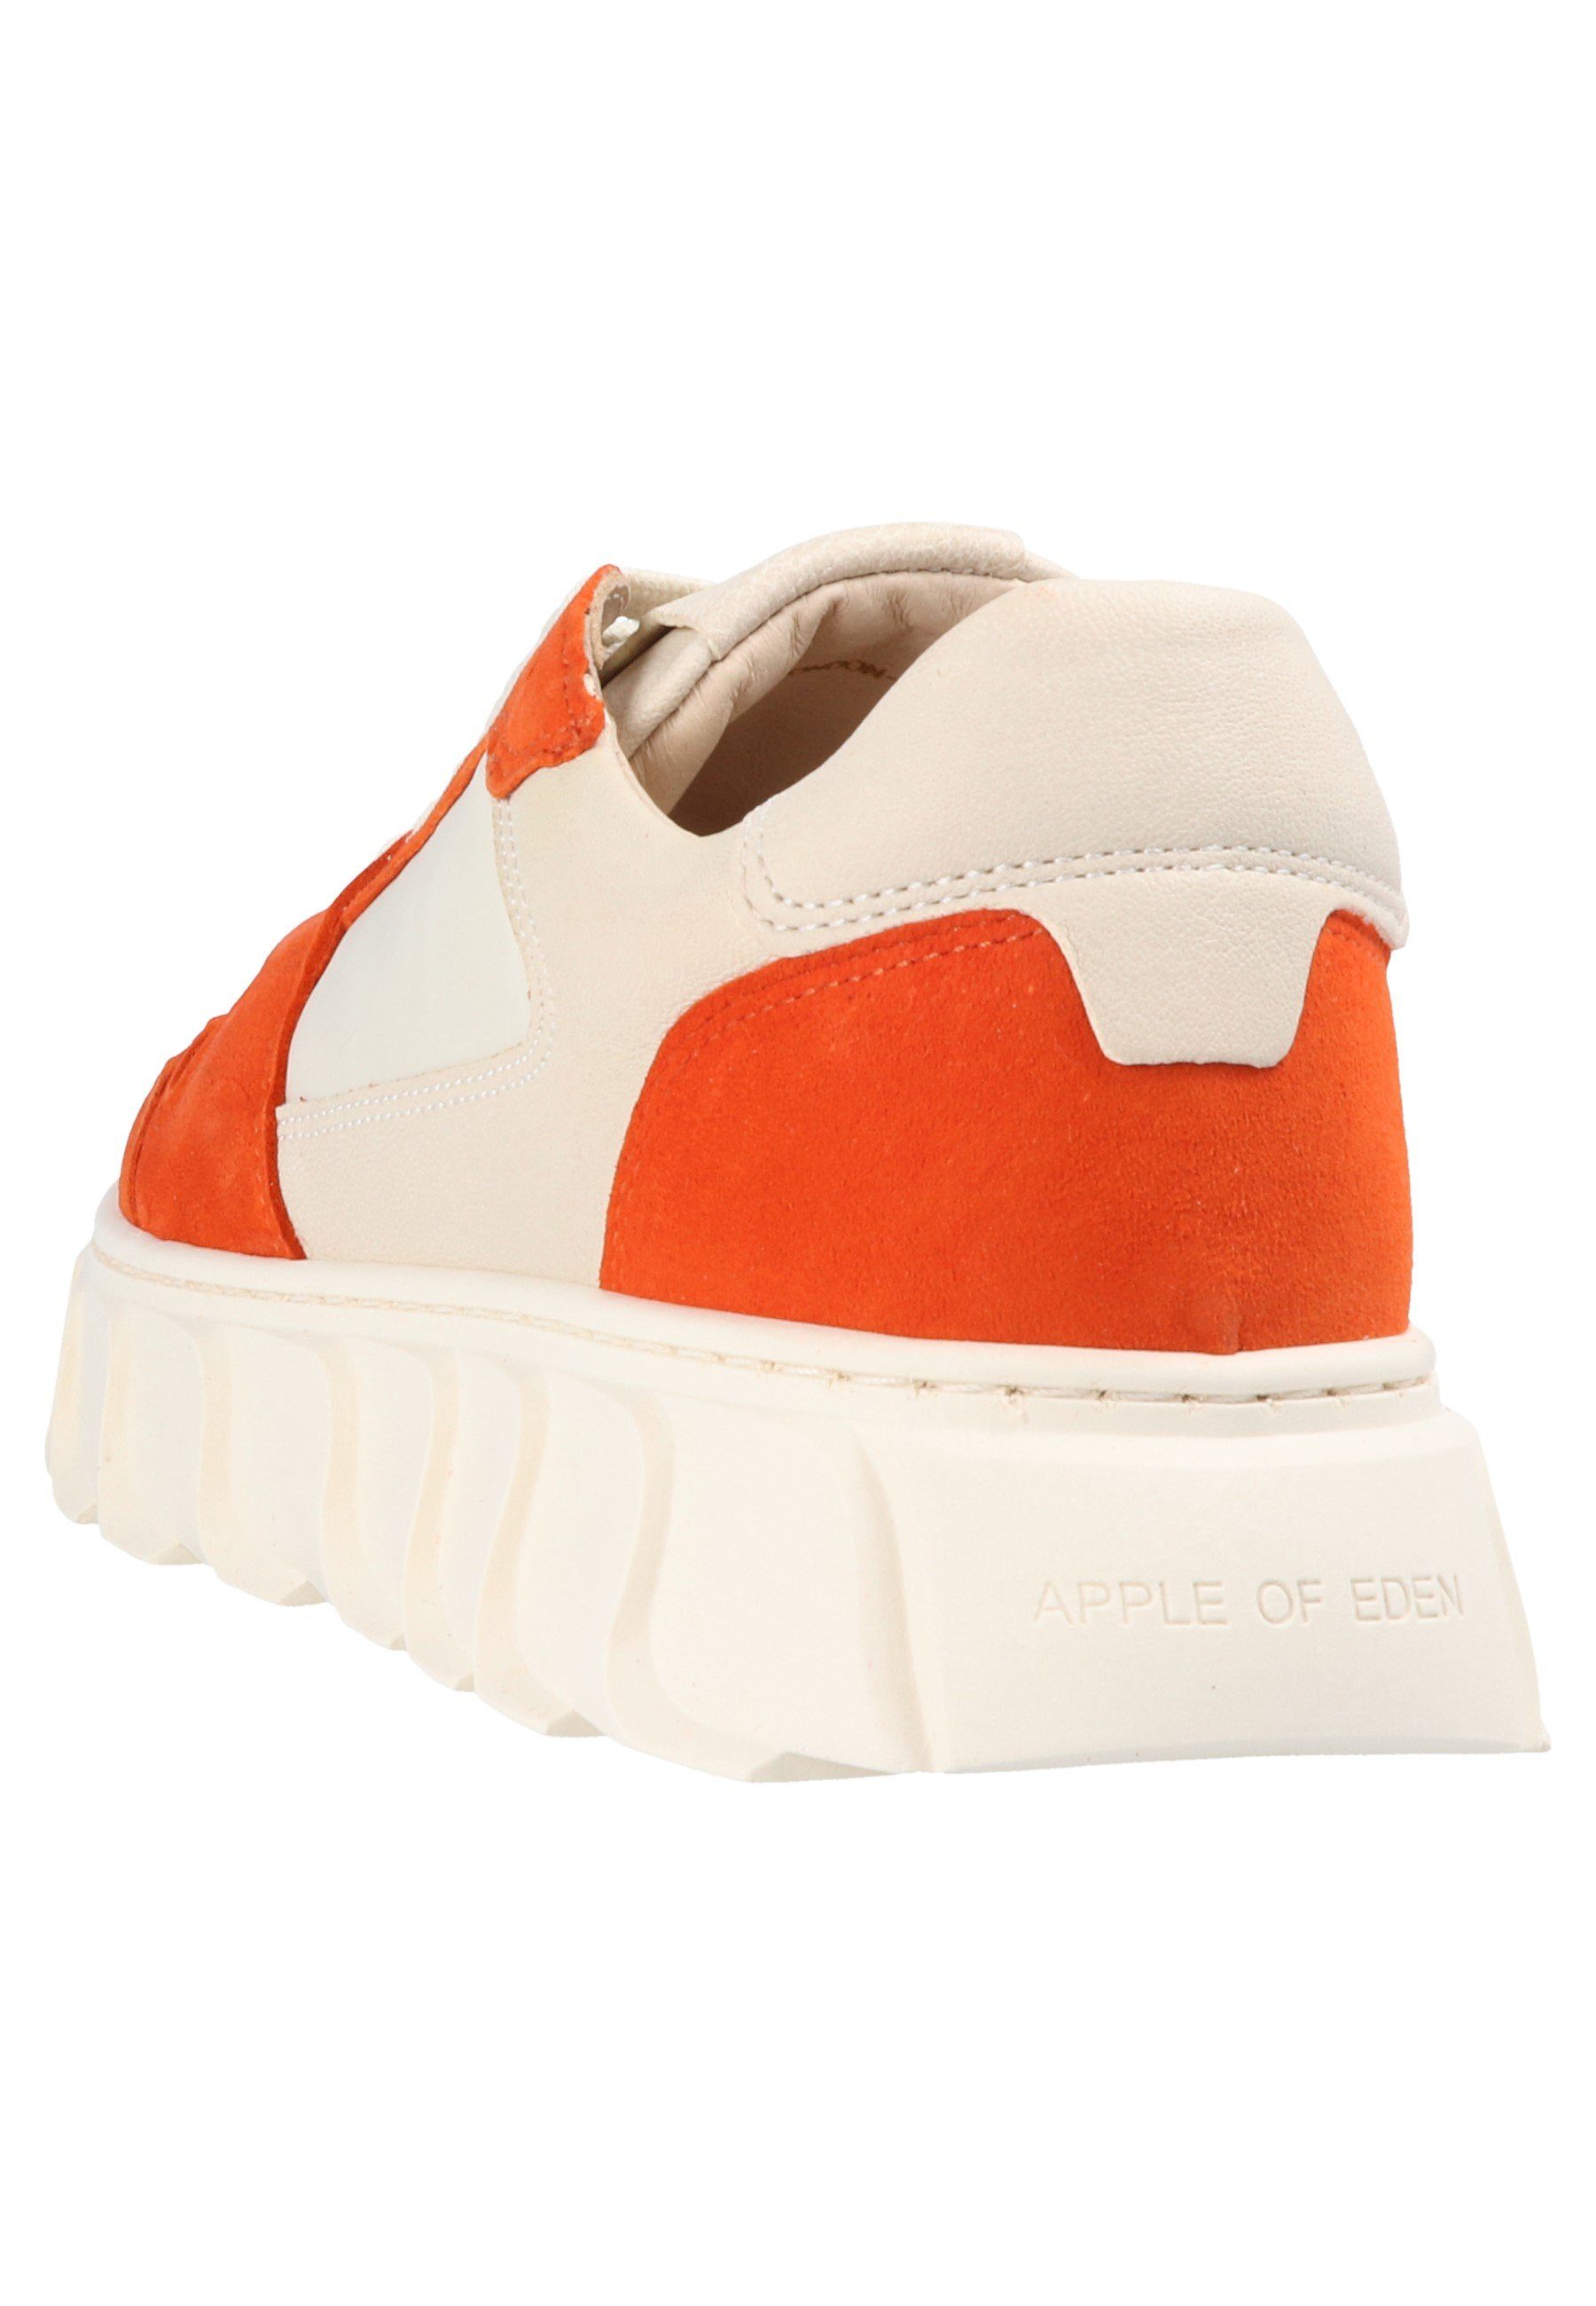 Eden Sneaker Orange of LONDON Apple SUEDE